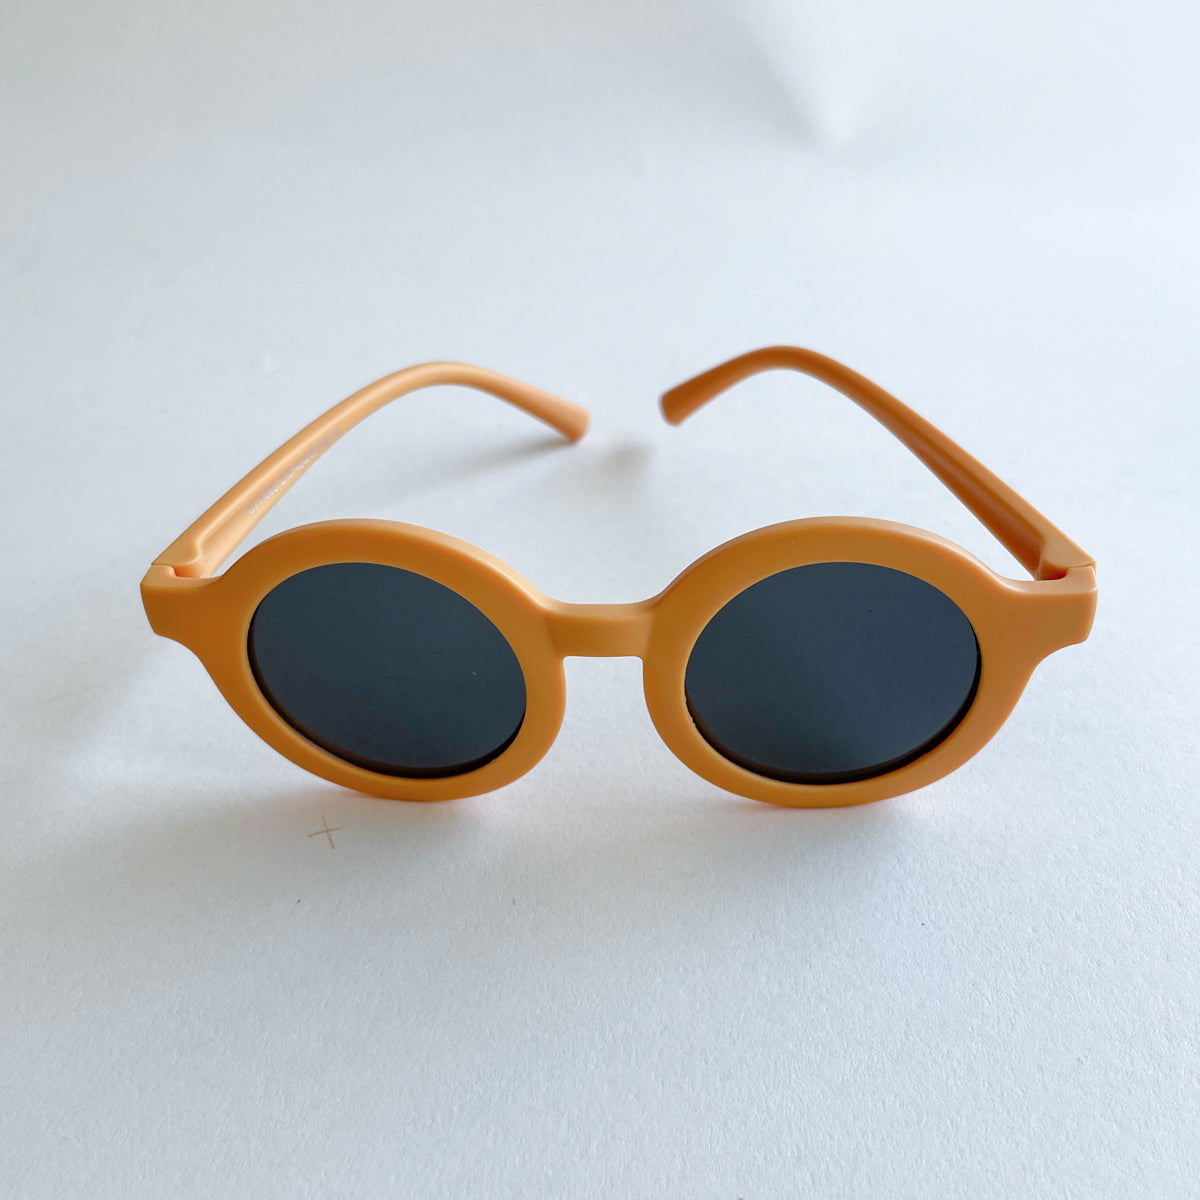 New Flexible, Resistant & Polarized UV 400 Kids Sunglasses Mustard